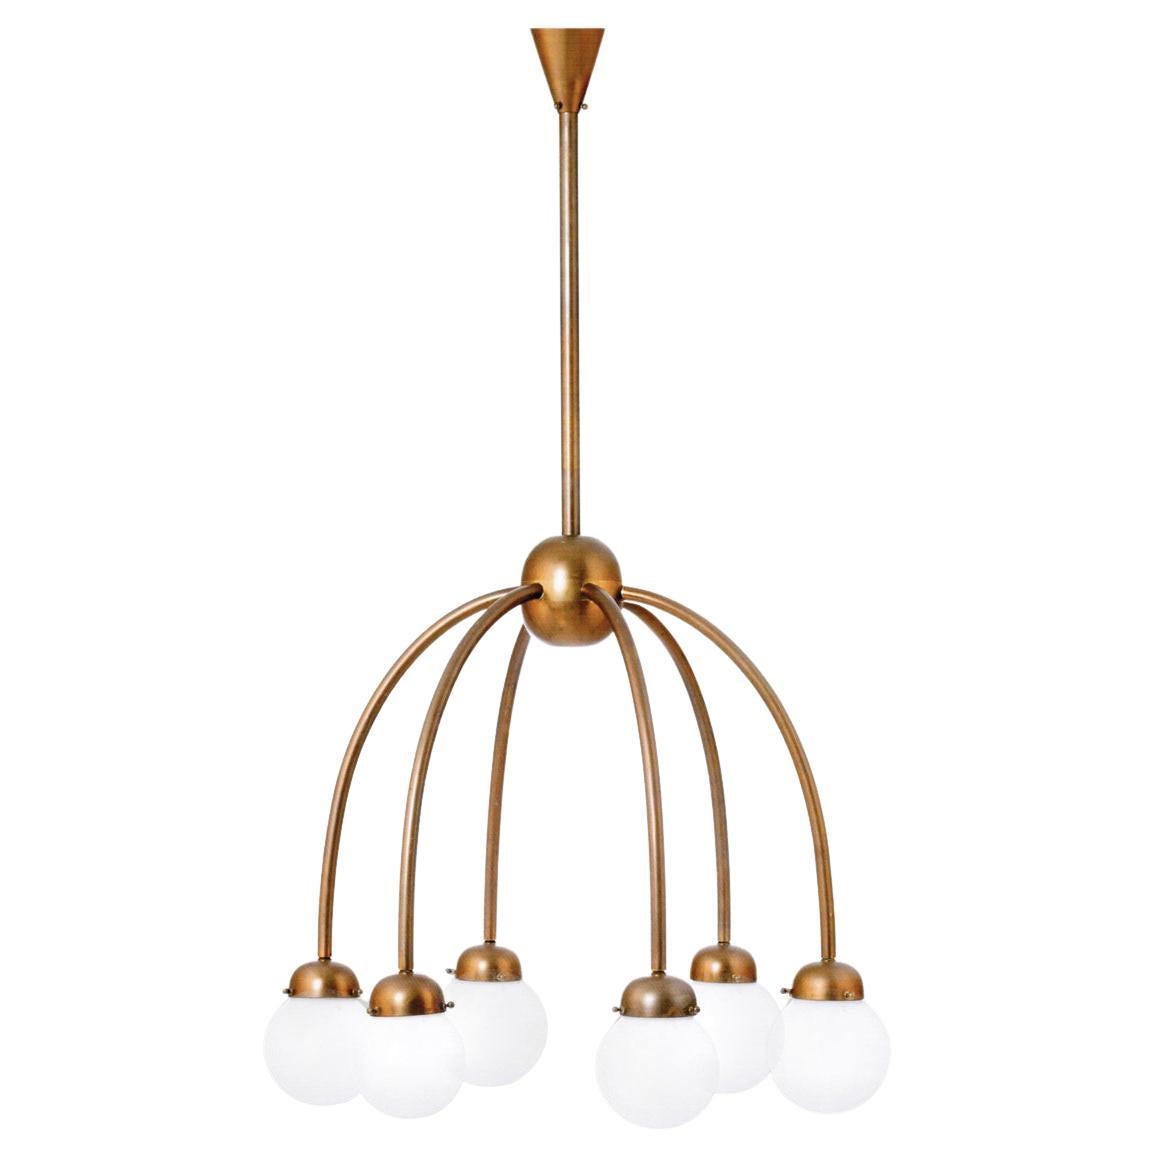 Josef Hoffmann for Wiener Werkstaette Art Deco Ceiling Lamp, Re-Edition For Sale